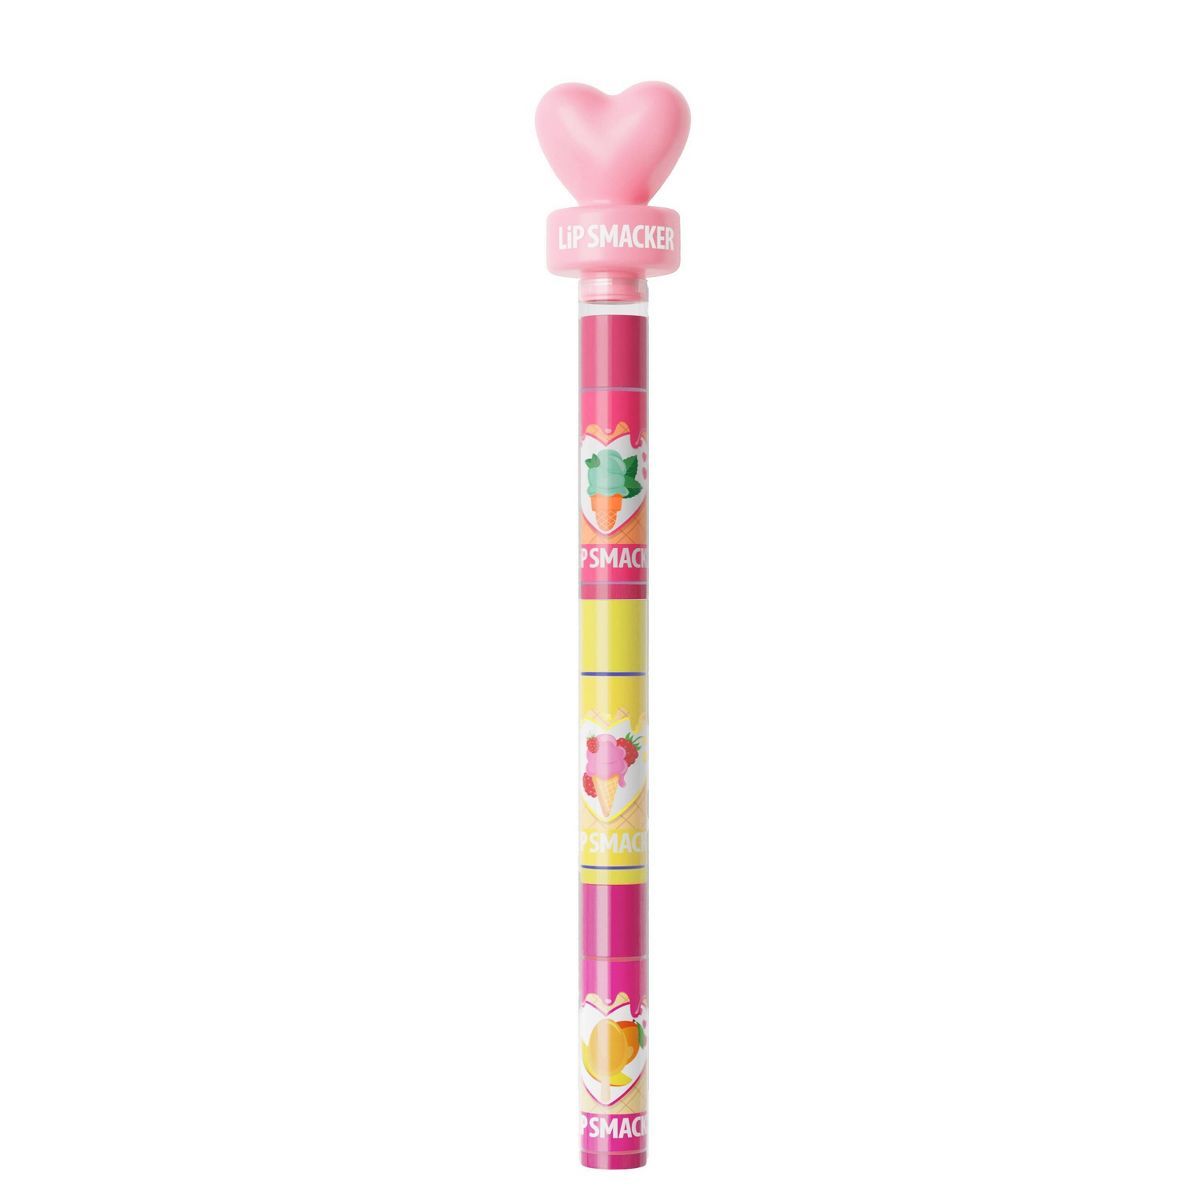 Lip Smacker Lip Balm Heart Toppers - Pink - 1.3oz/3pc | Target